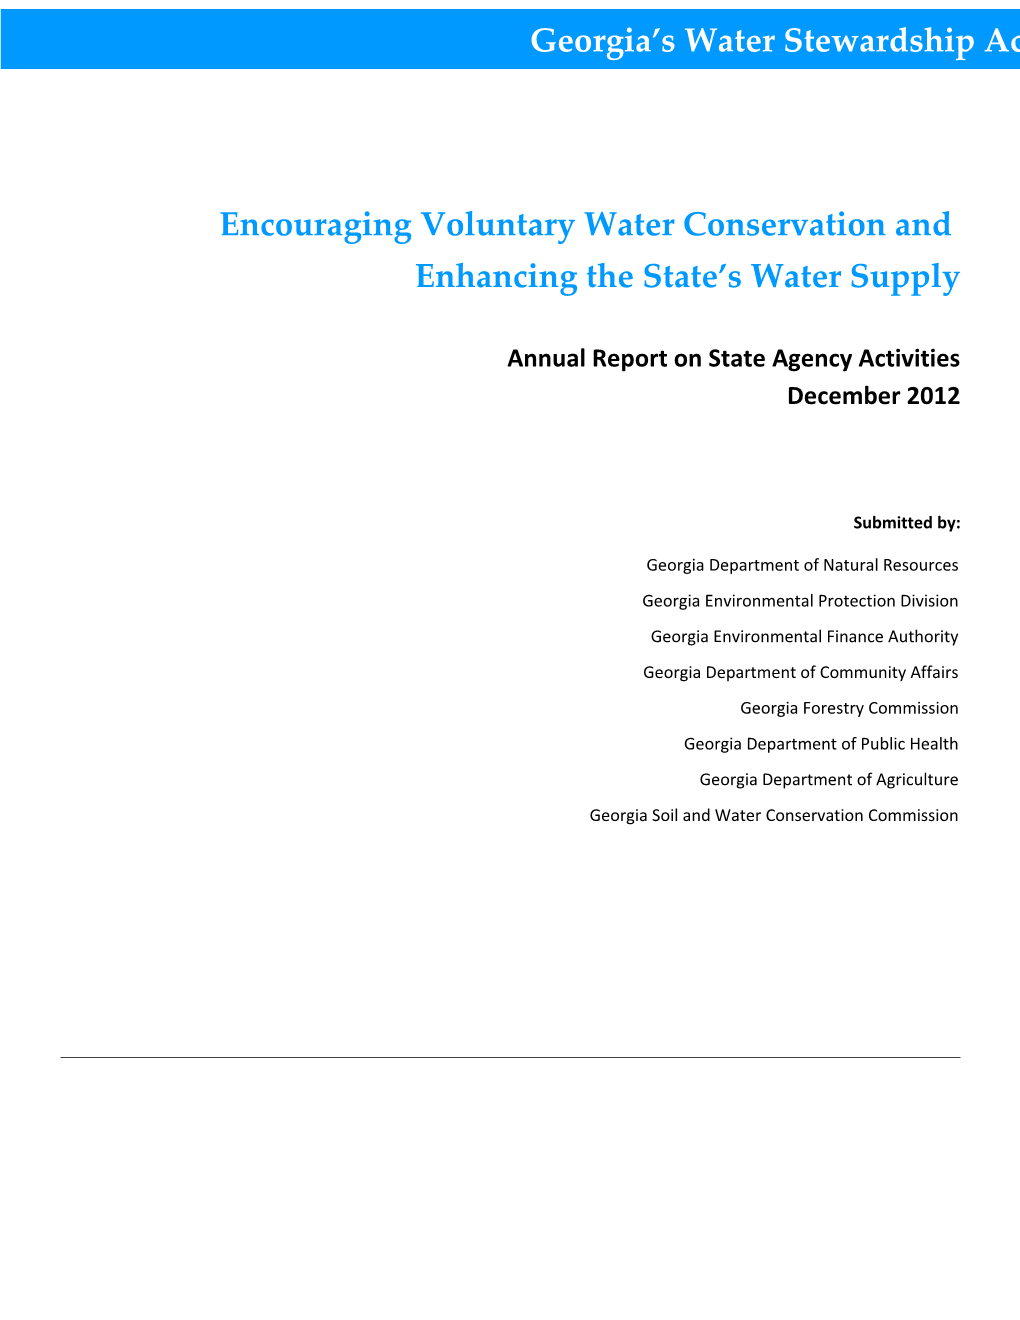 Senate Bill 370 the Water Stewardship Act of 2010